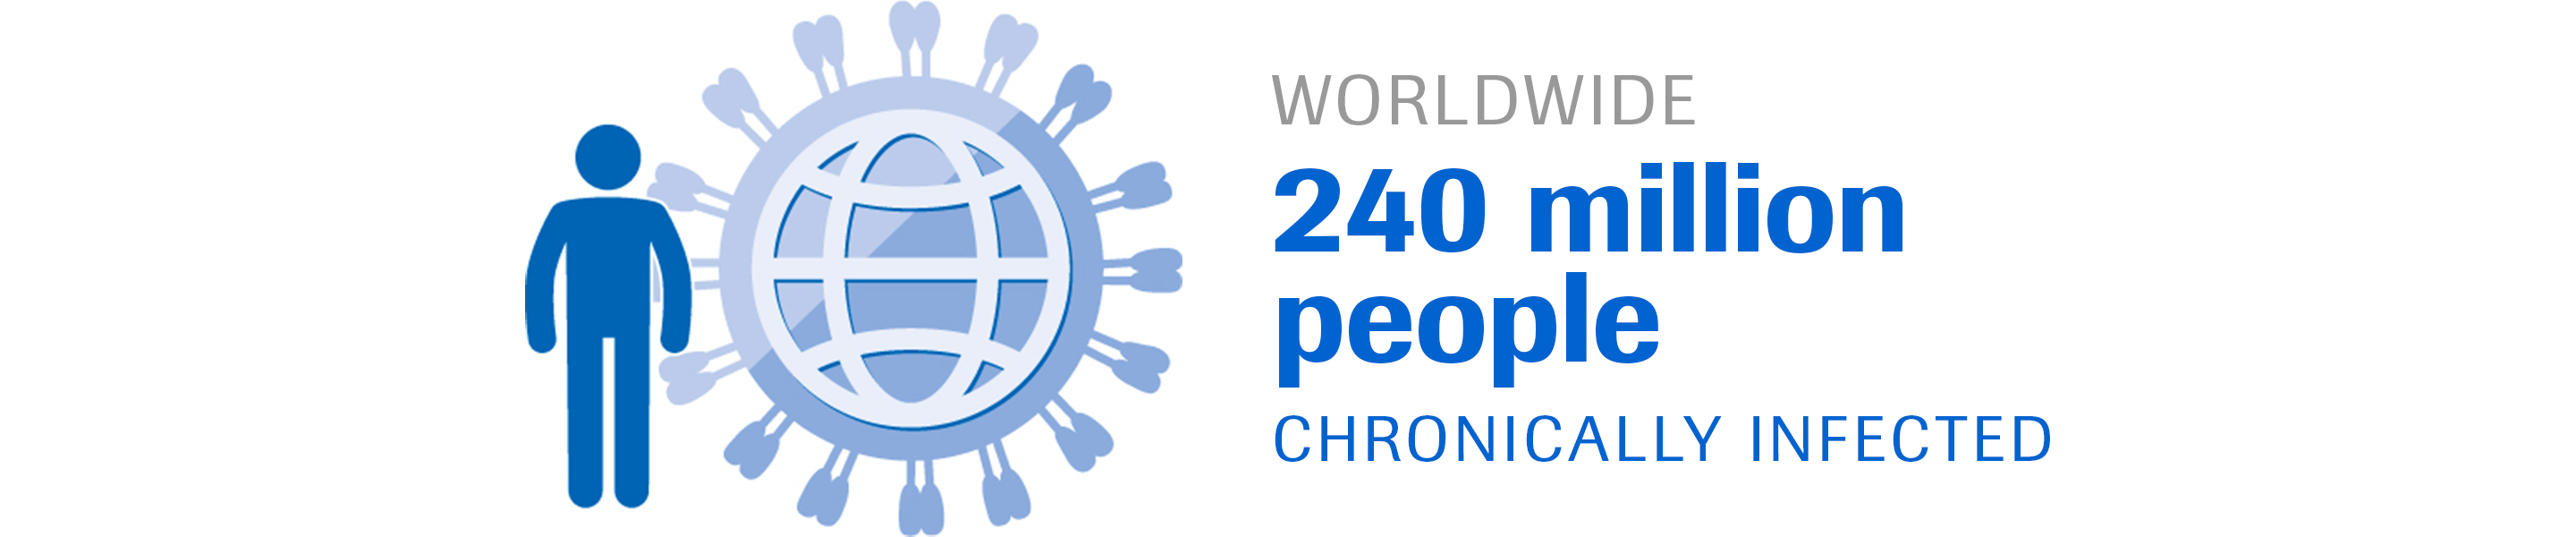 HBV Worldwide Statistic